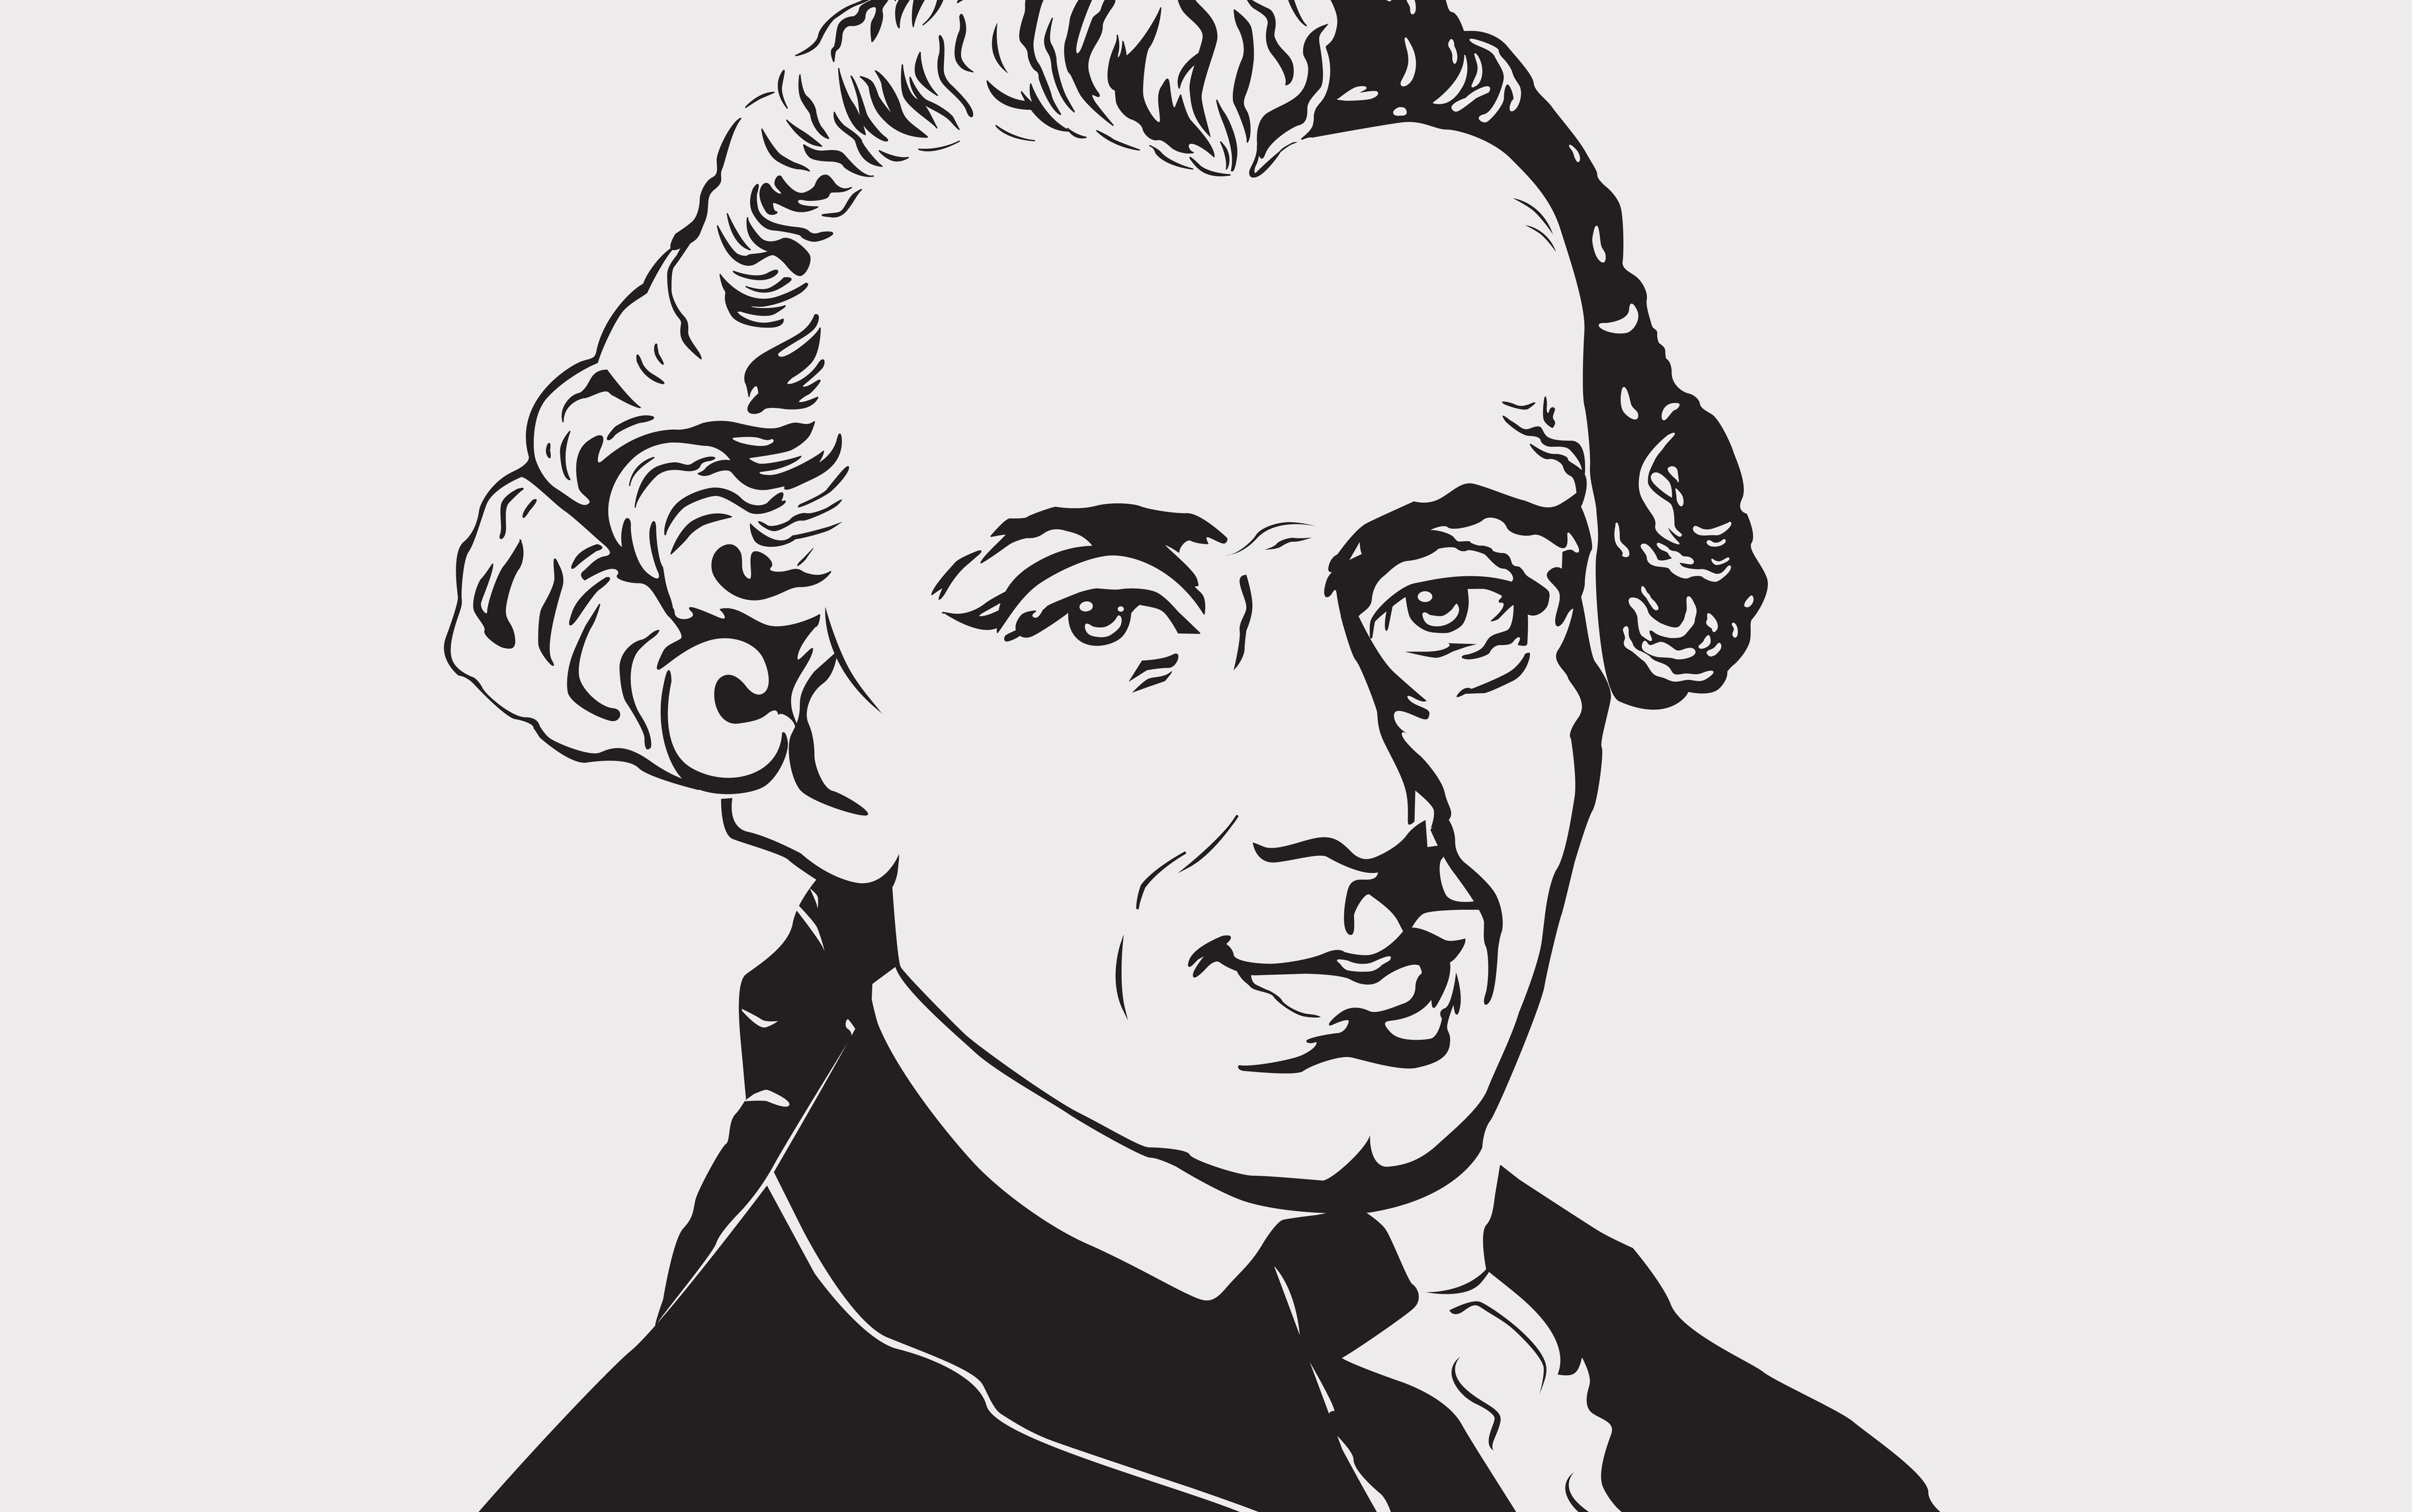 Der Philosoph Immanuel Kant